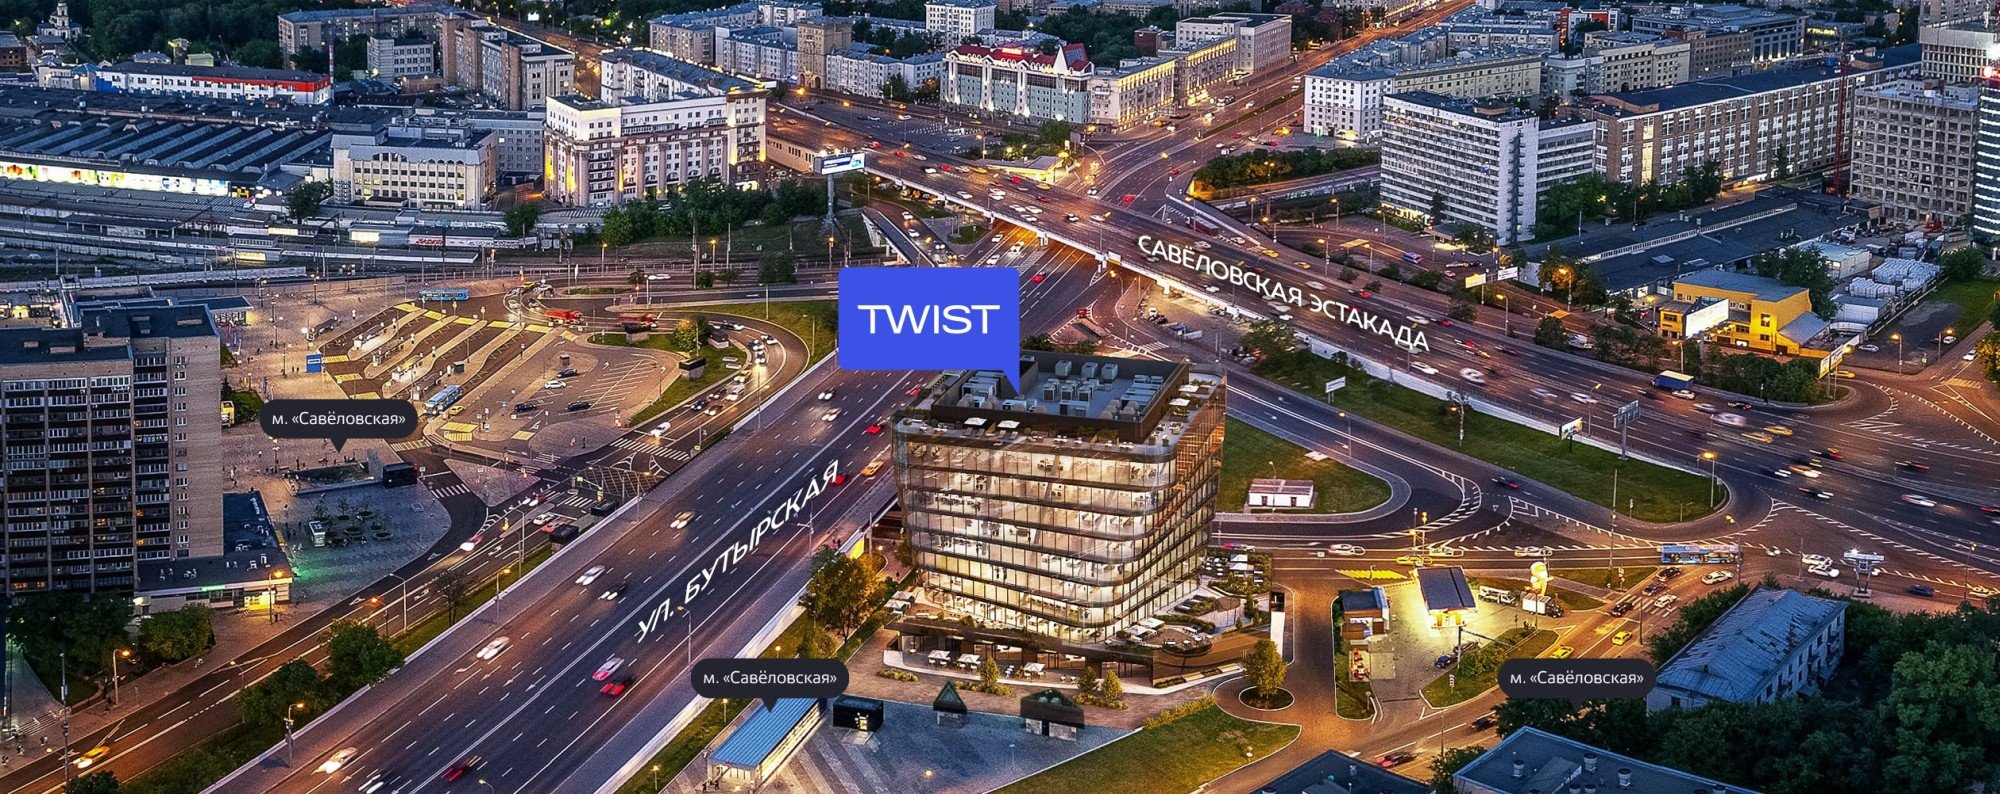 Вид на TWIST и центр города